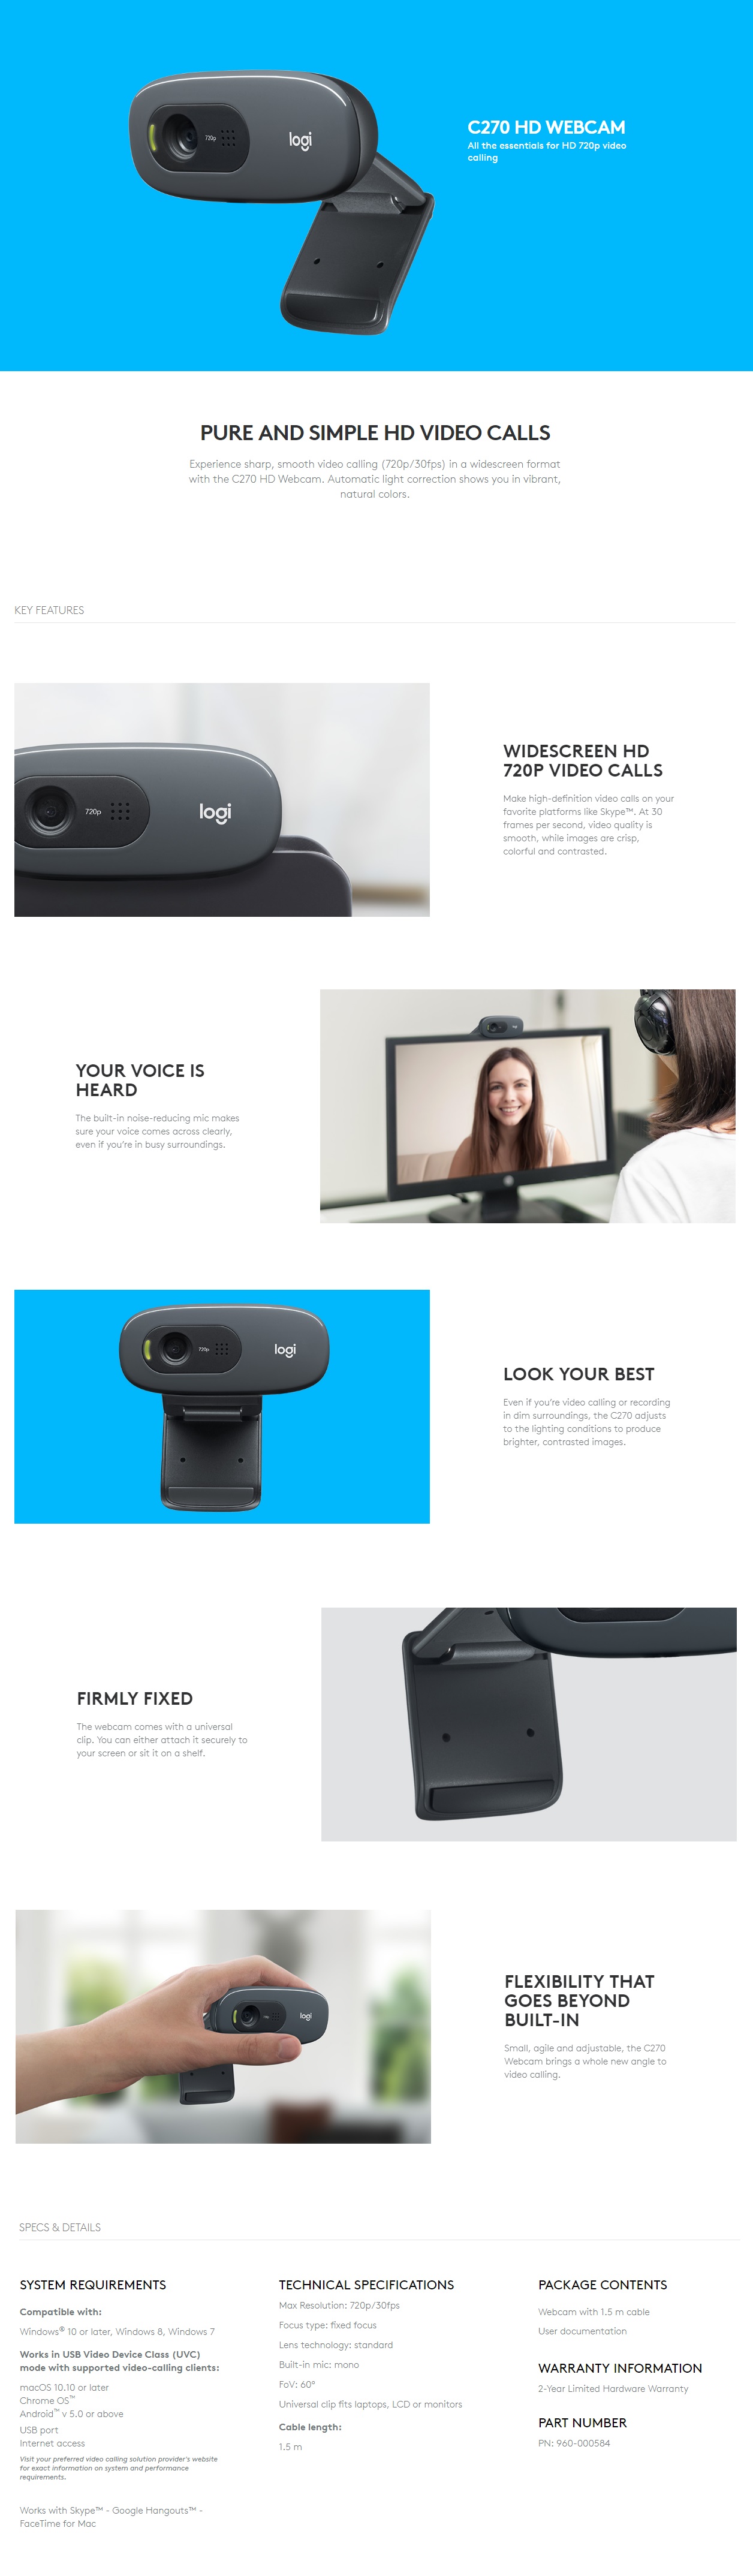  Webcam: C270 HD 720p video calling, 3 megapizel snapshots, built in mic, right light technology, free video editing softwarre  